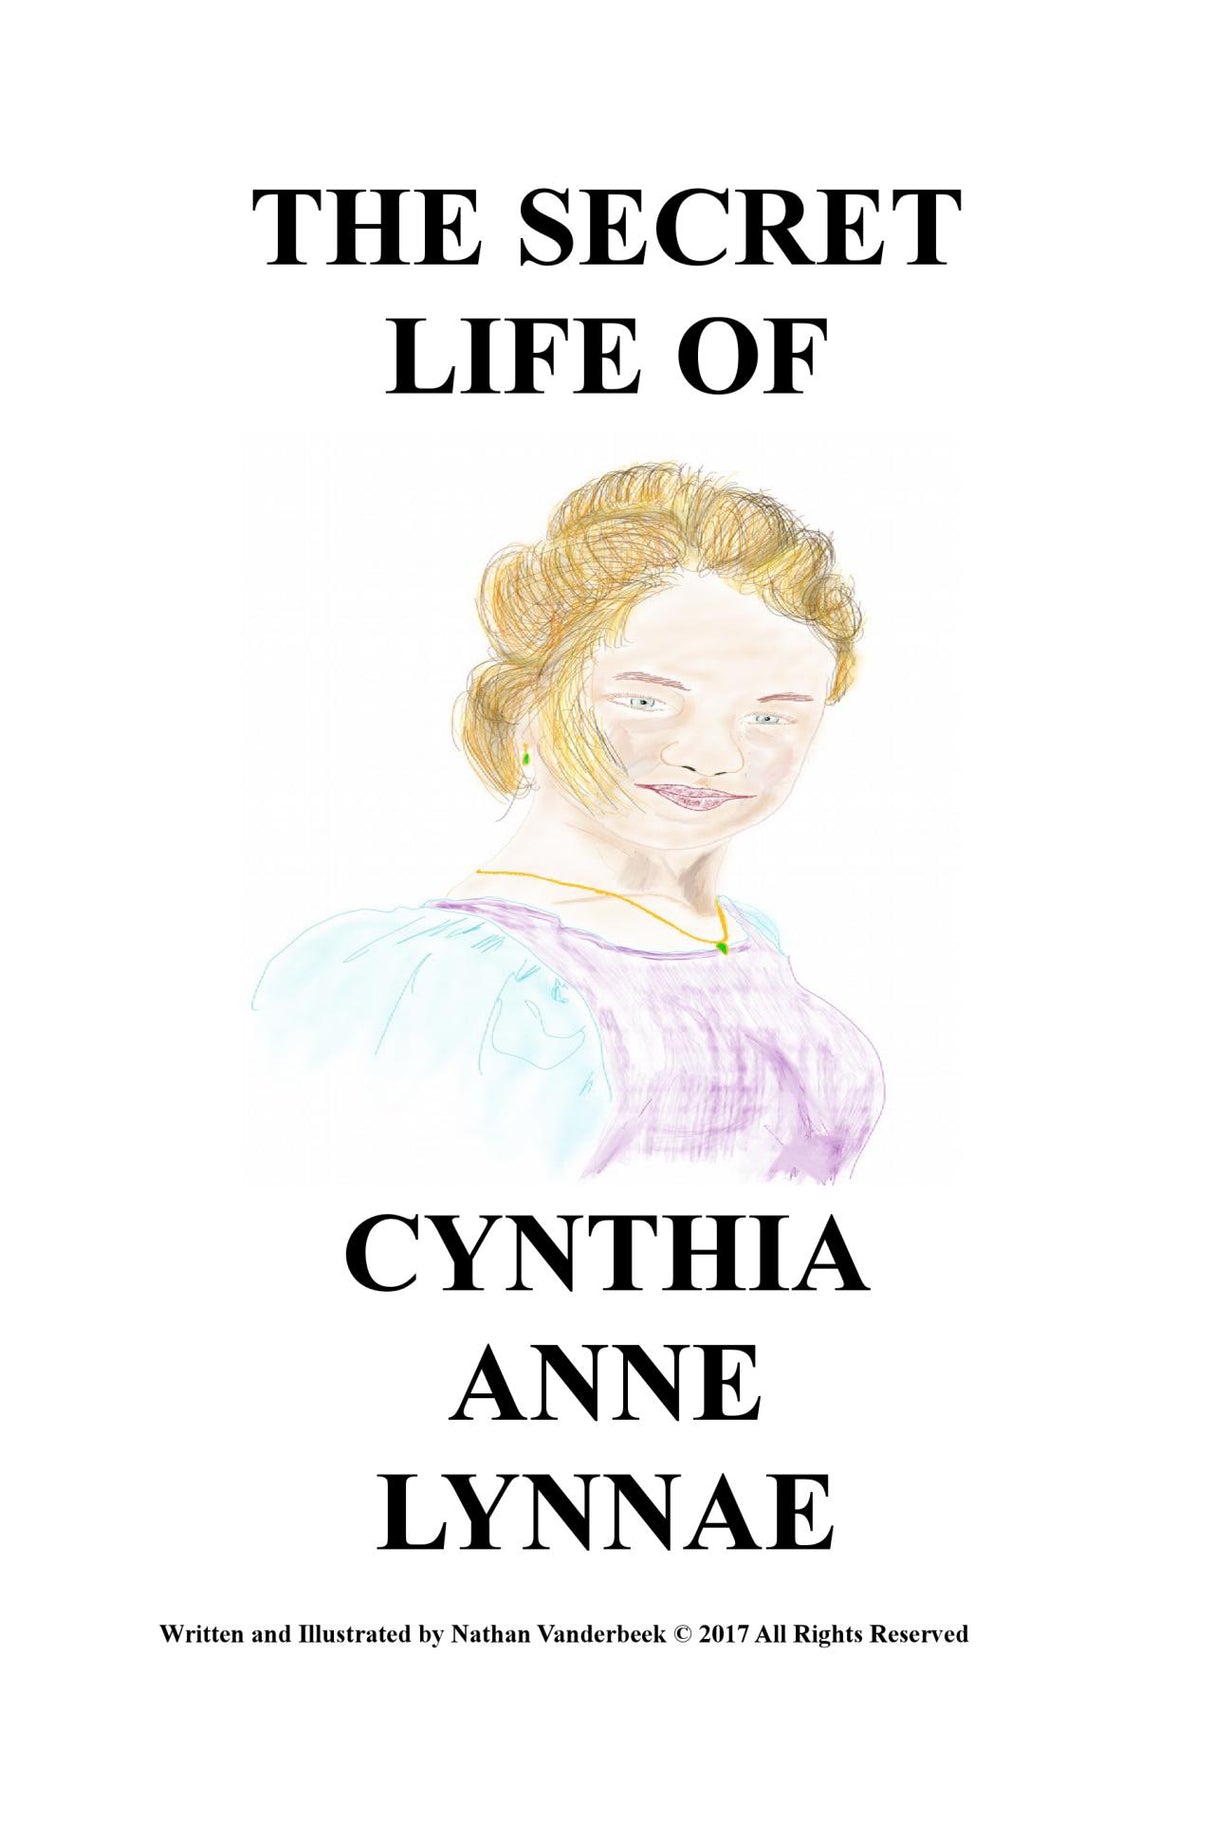 THE SECRET LIFE OF CYNTHIA ANNE LYNNAE